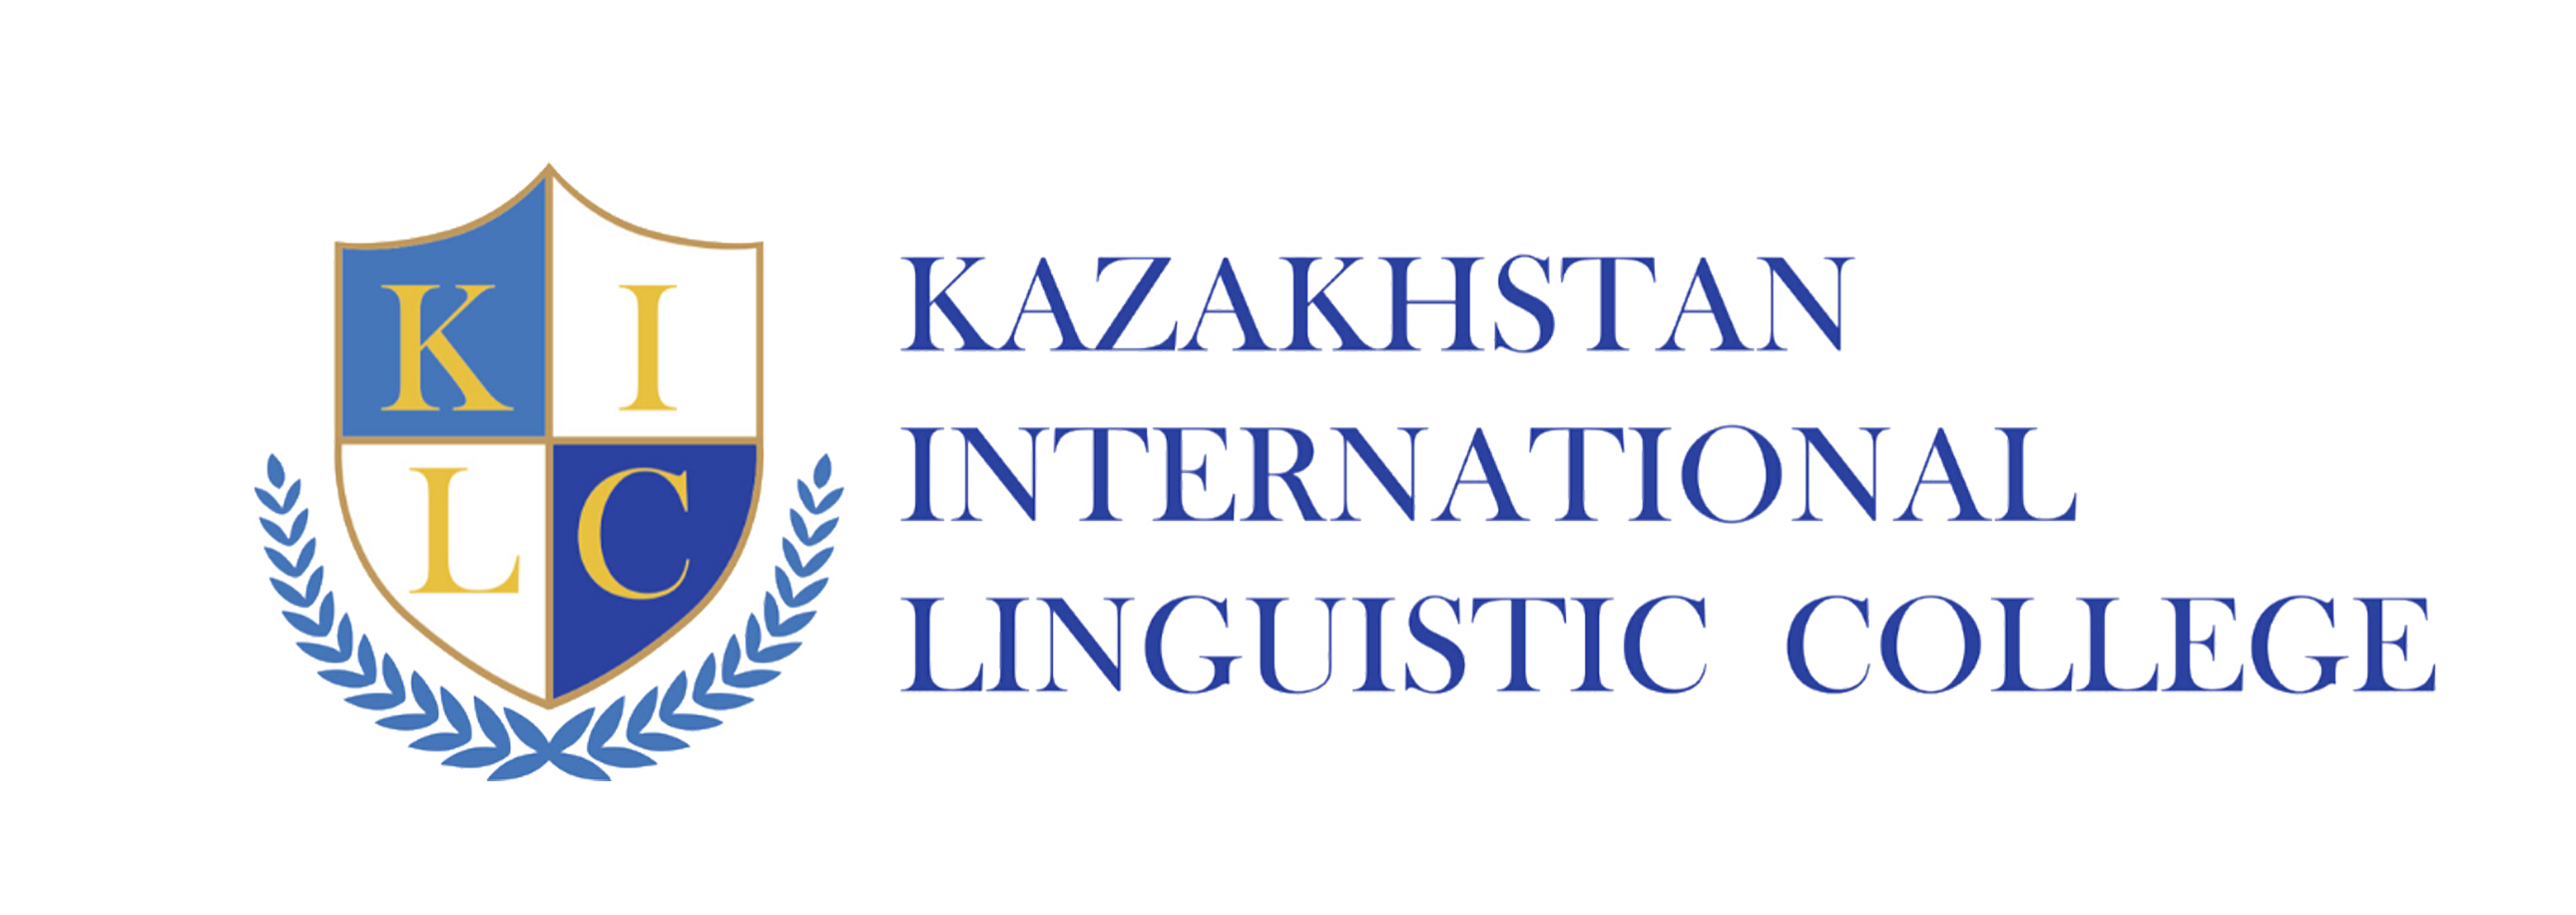 Kazakhstan International Linguistic College